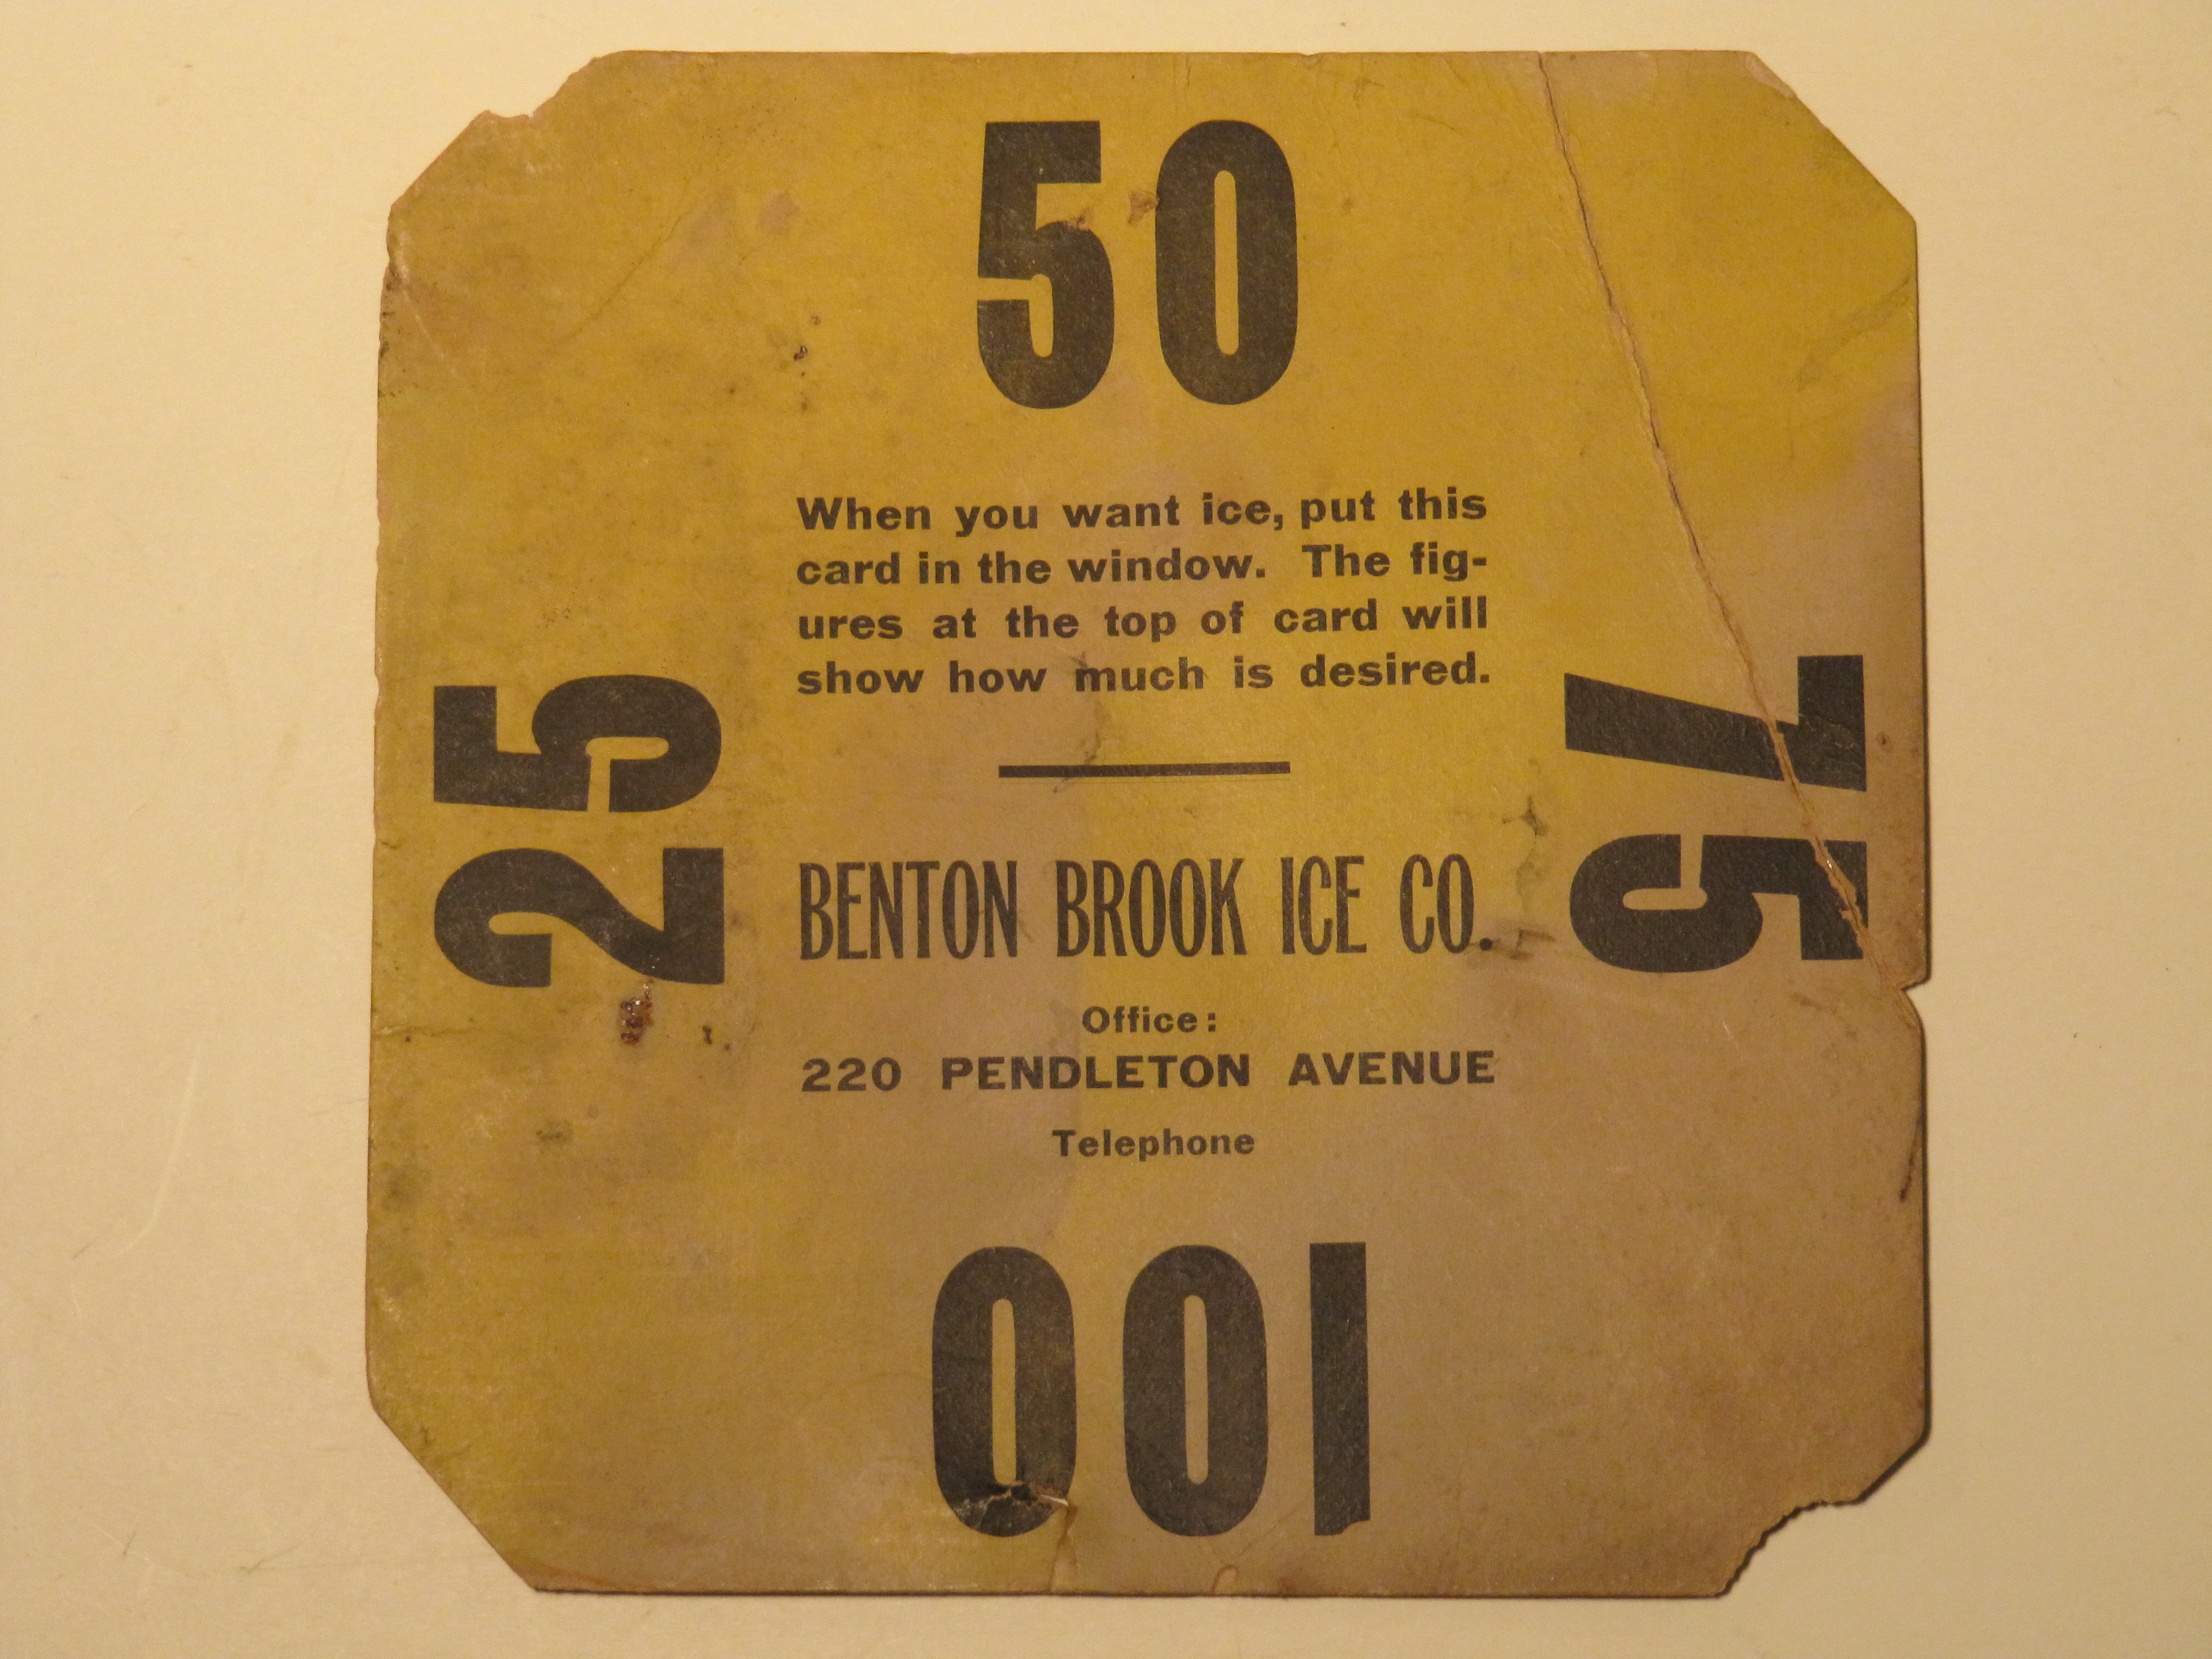 Benton Brook Ice Co.